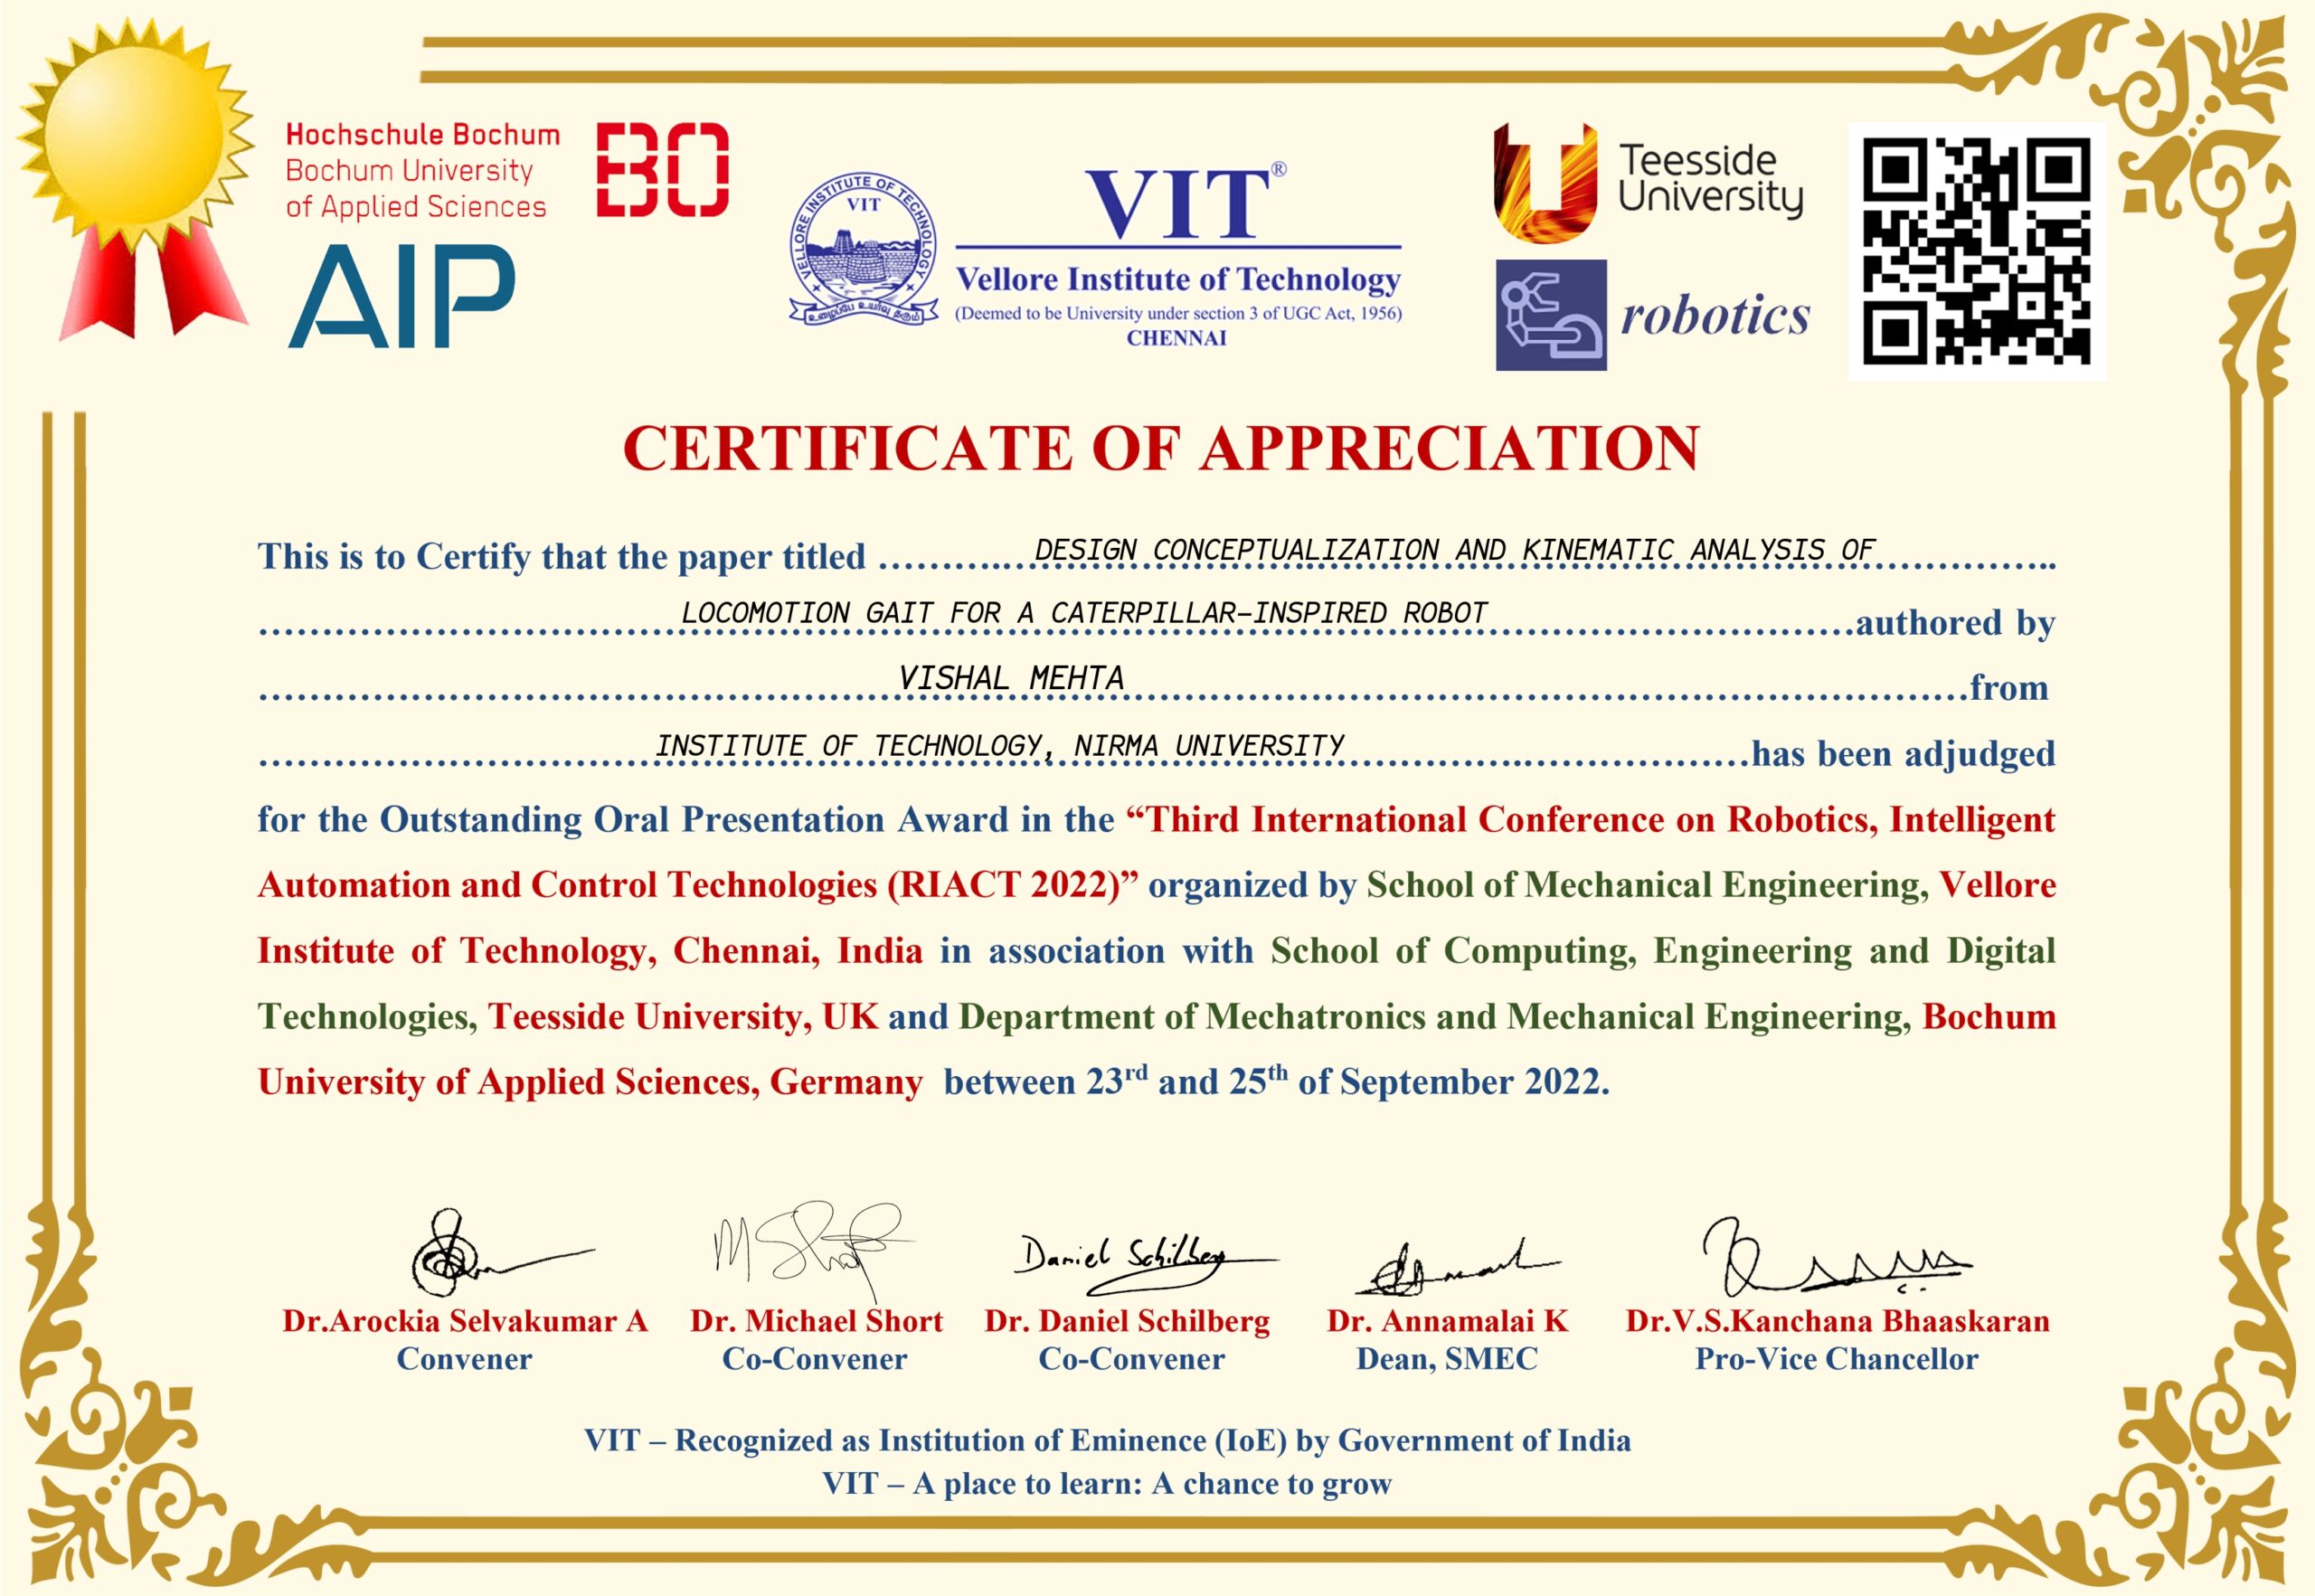 online paper presentation certificate 2022